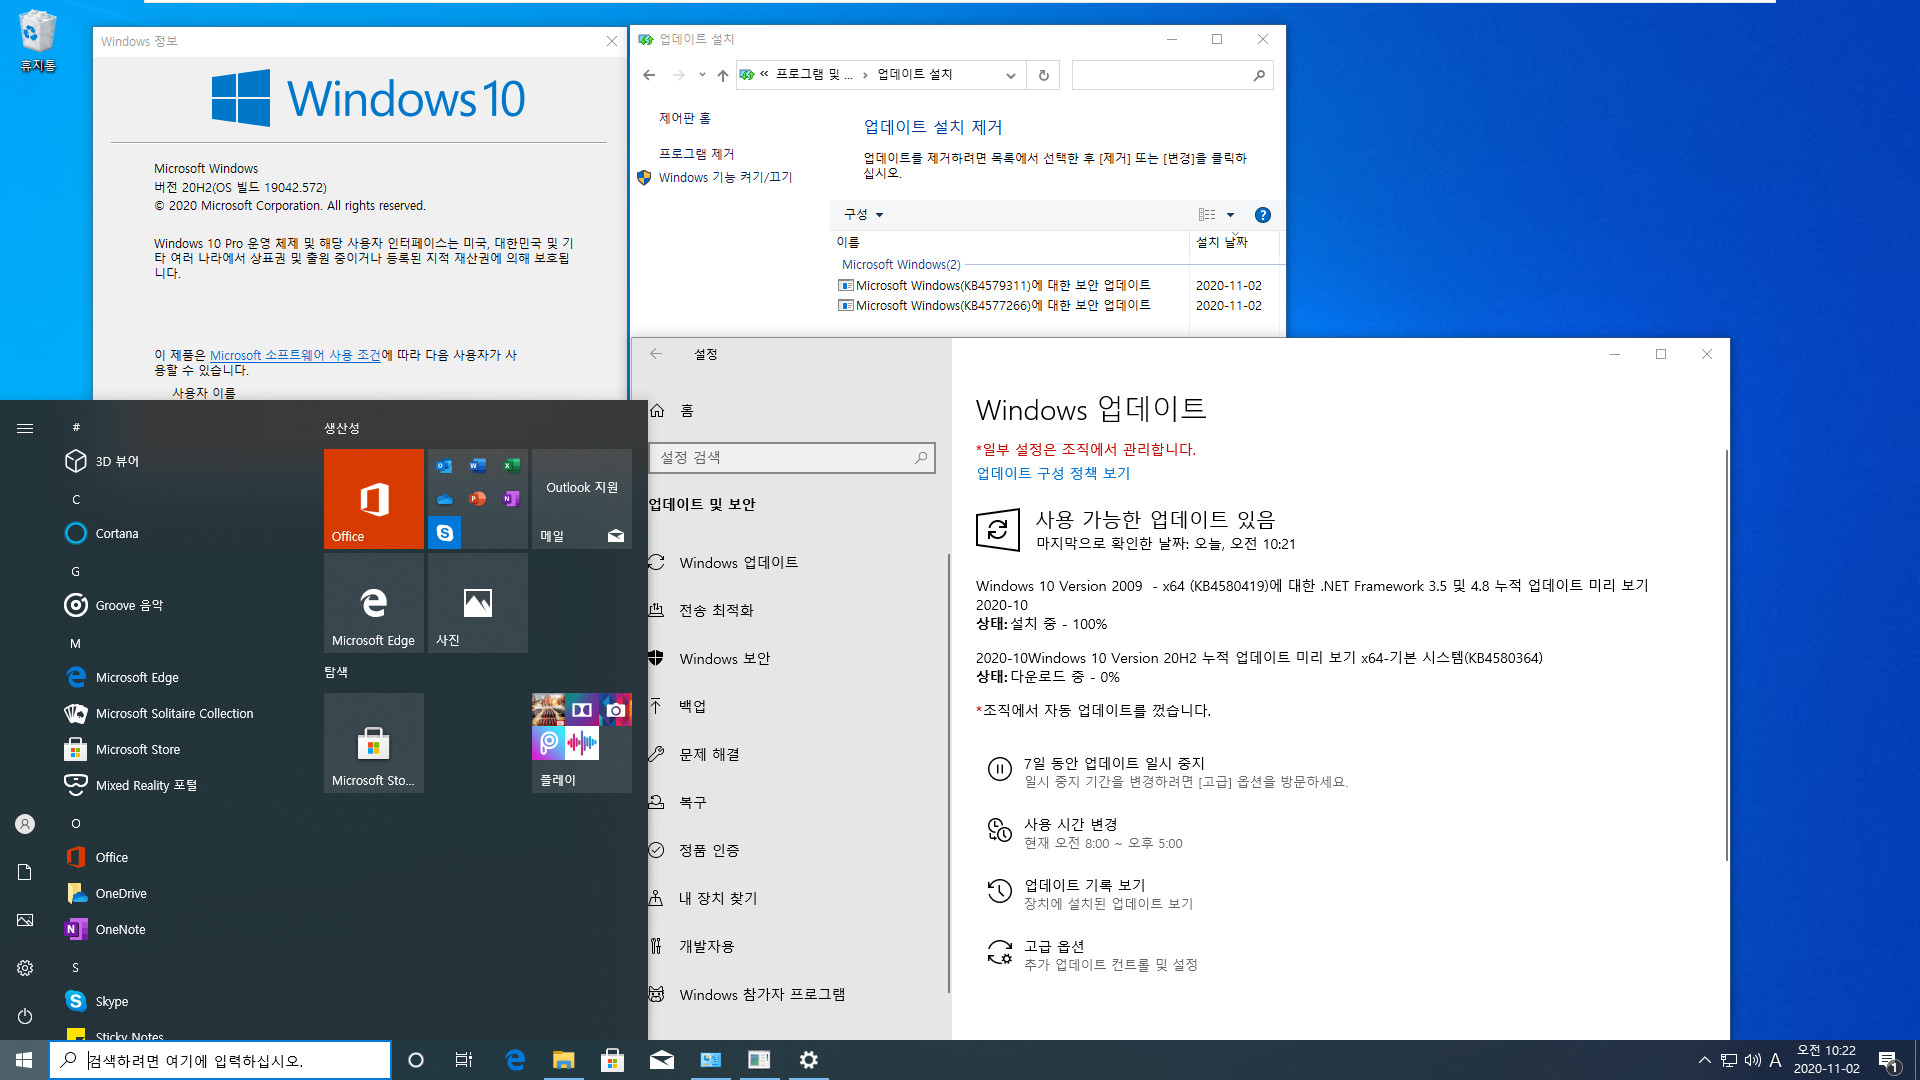 Windows 10 버전 20H2 기능 업데이트 KB4562830 폴더의 mum 파일들만 찾아서 설치하기.bat - 크로미엄 엣지 설치하지 않고 버전 20H2만 설치하기 테스트 - 뻘짓했네요 2020-11-02_102251.jpg